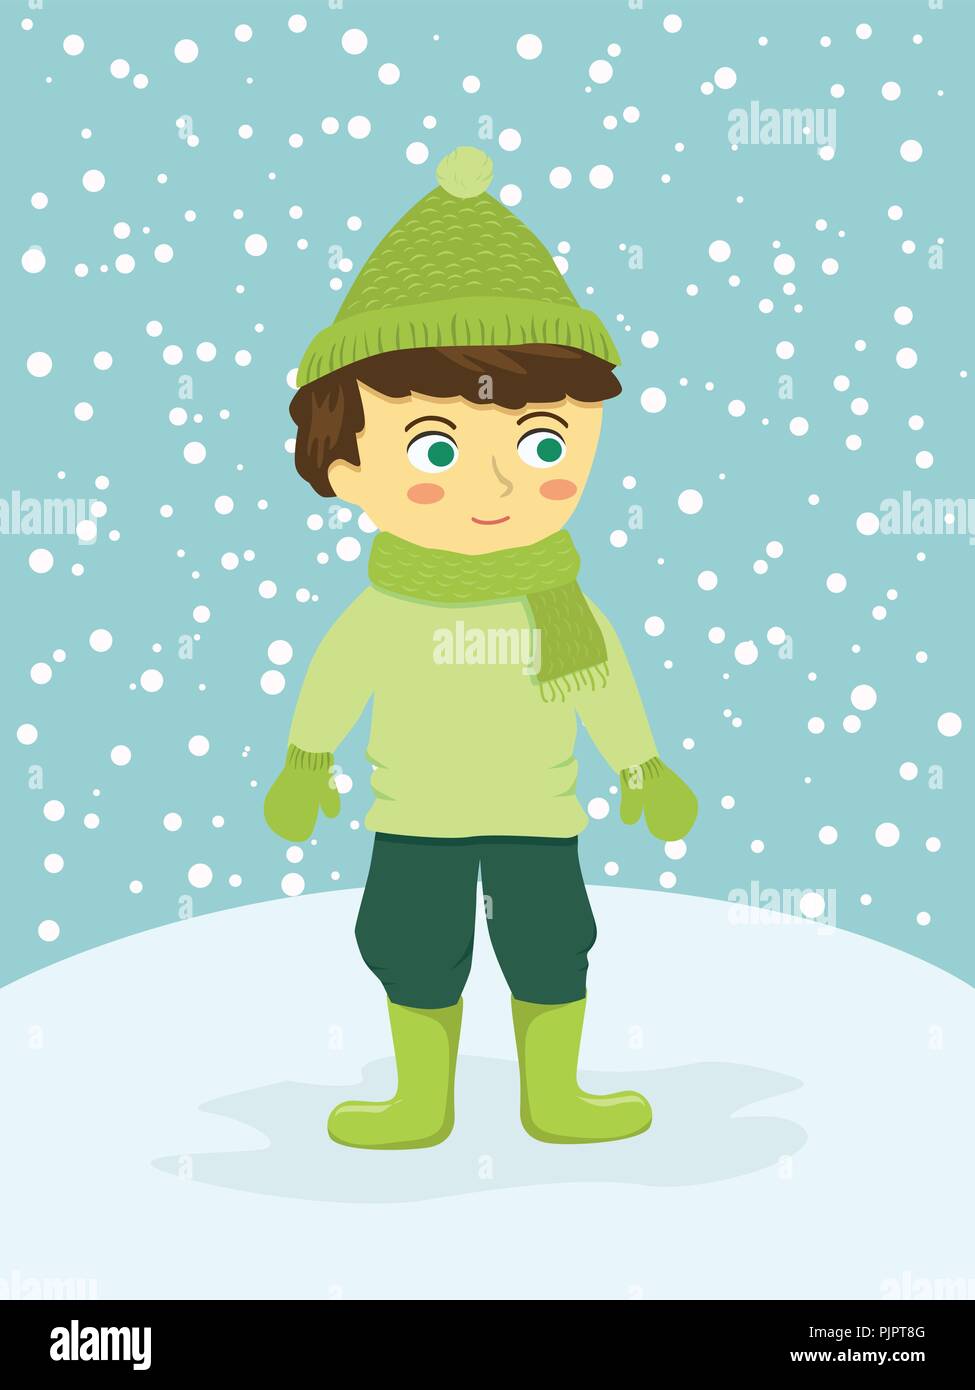 Cute boy wear green winter suit sweater standing in winter snowy days vector illustration Stock Vector